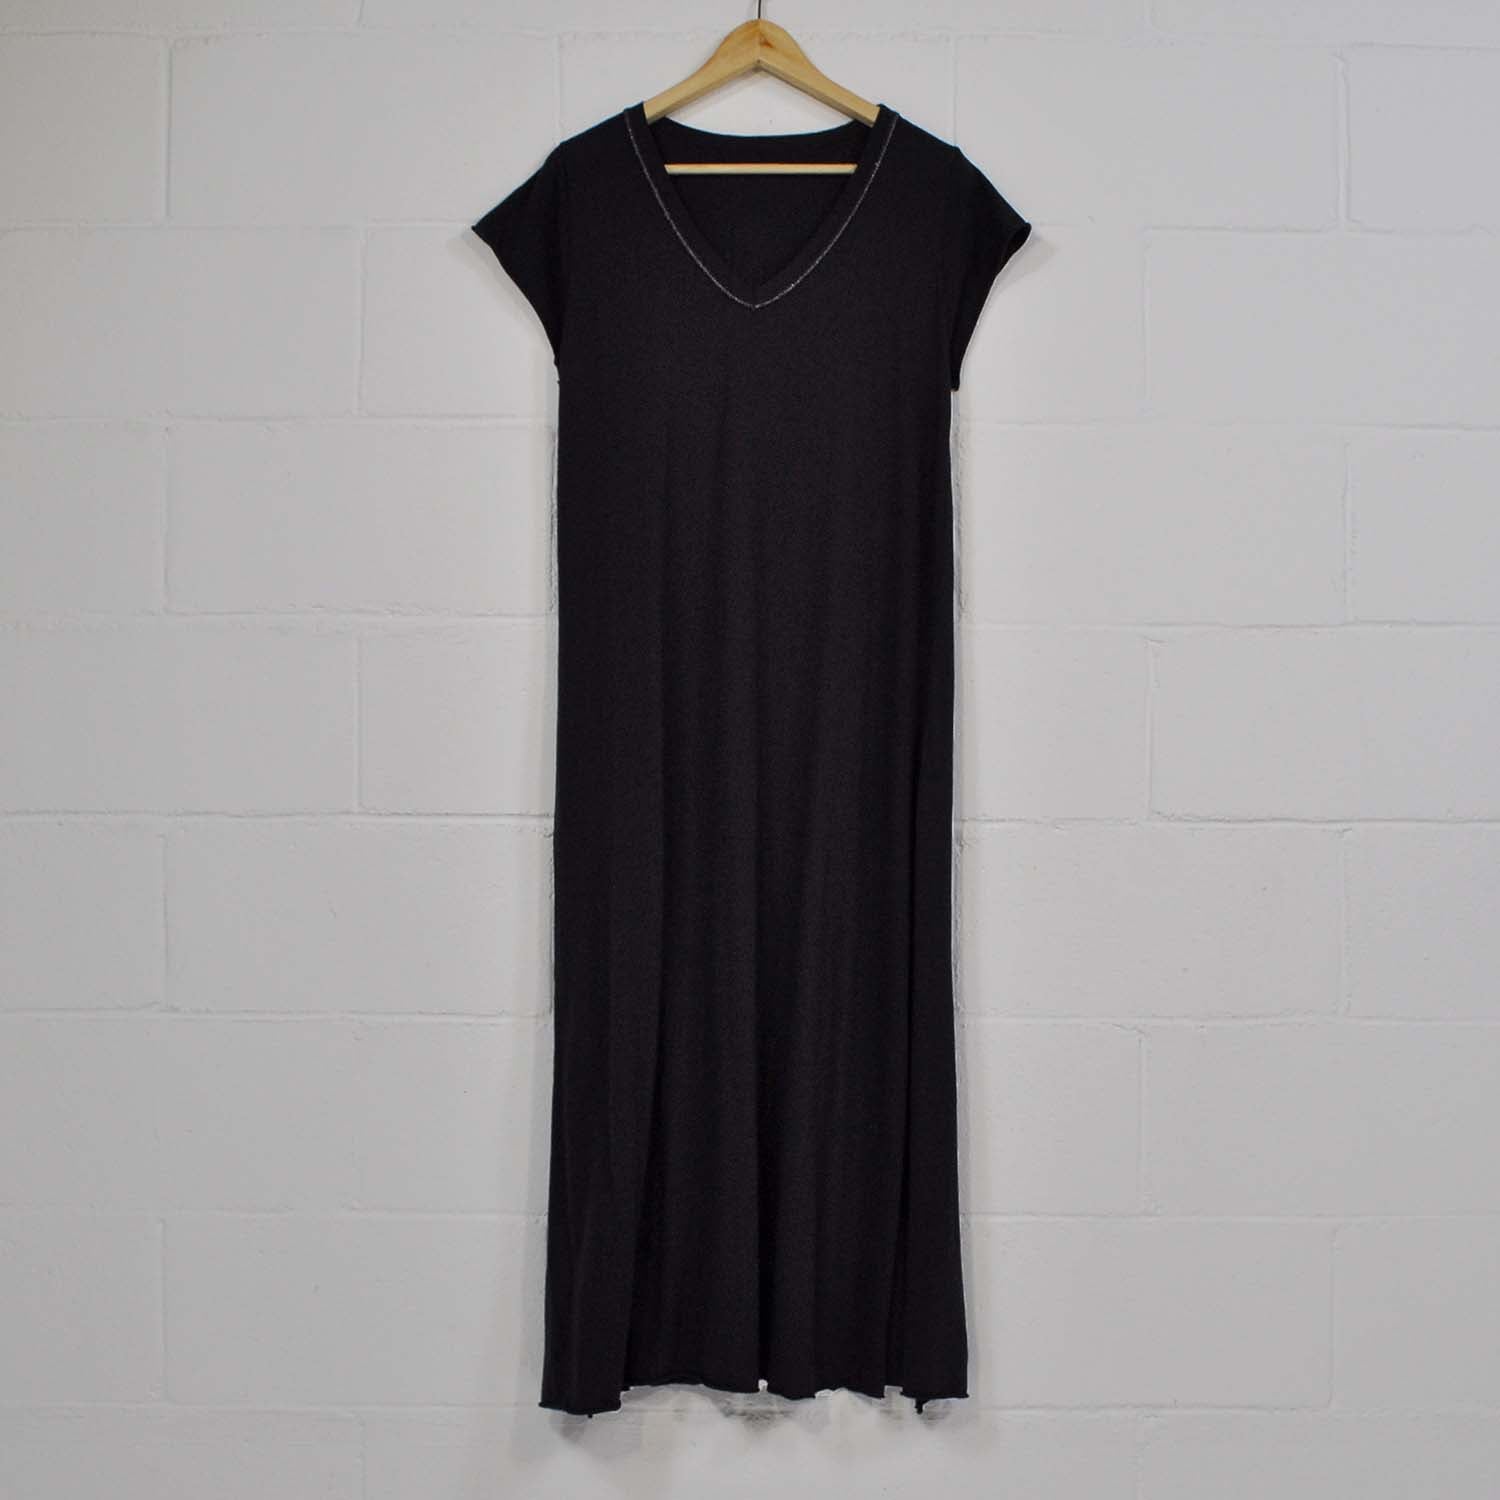 Shiny neckline black dress